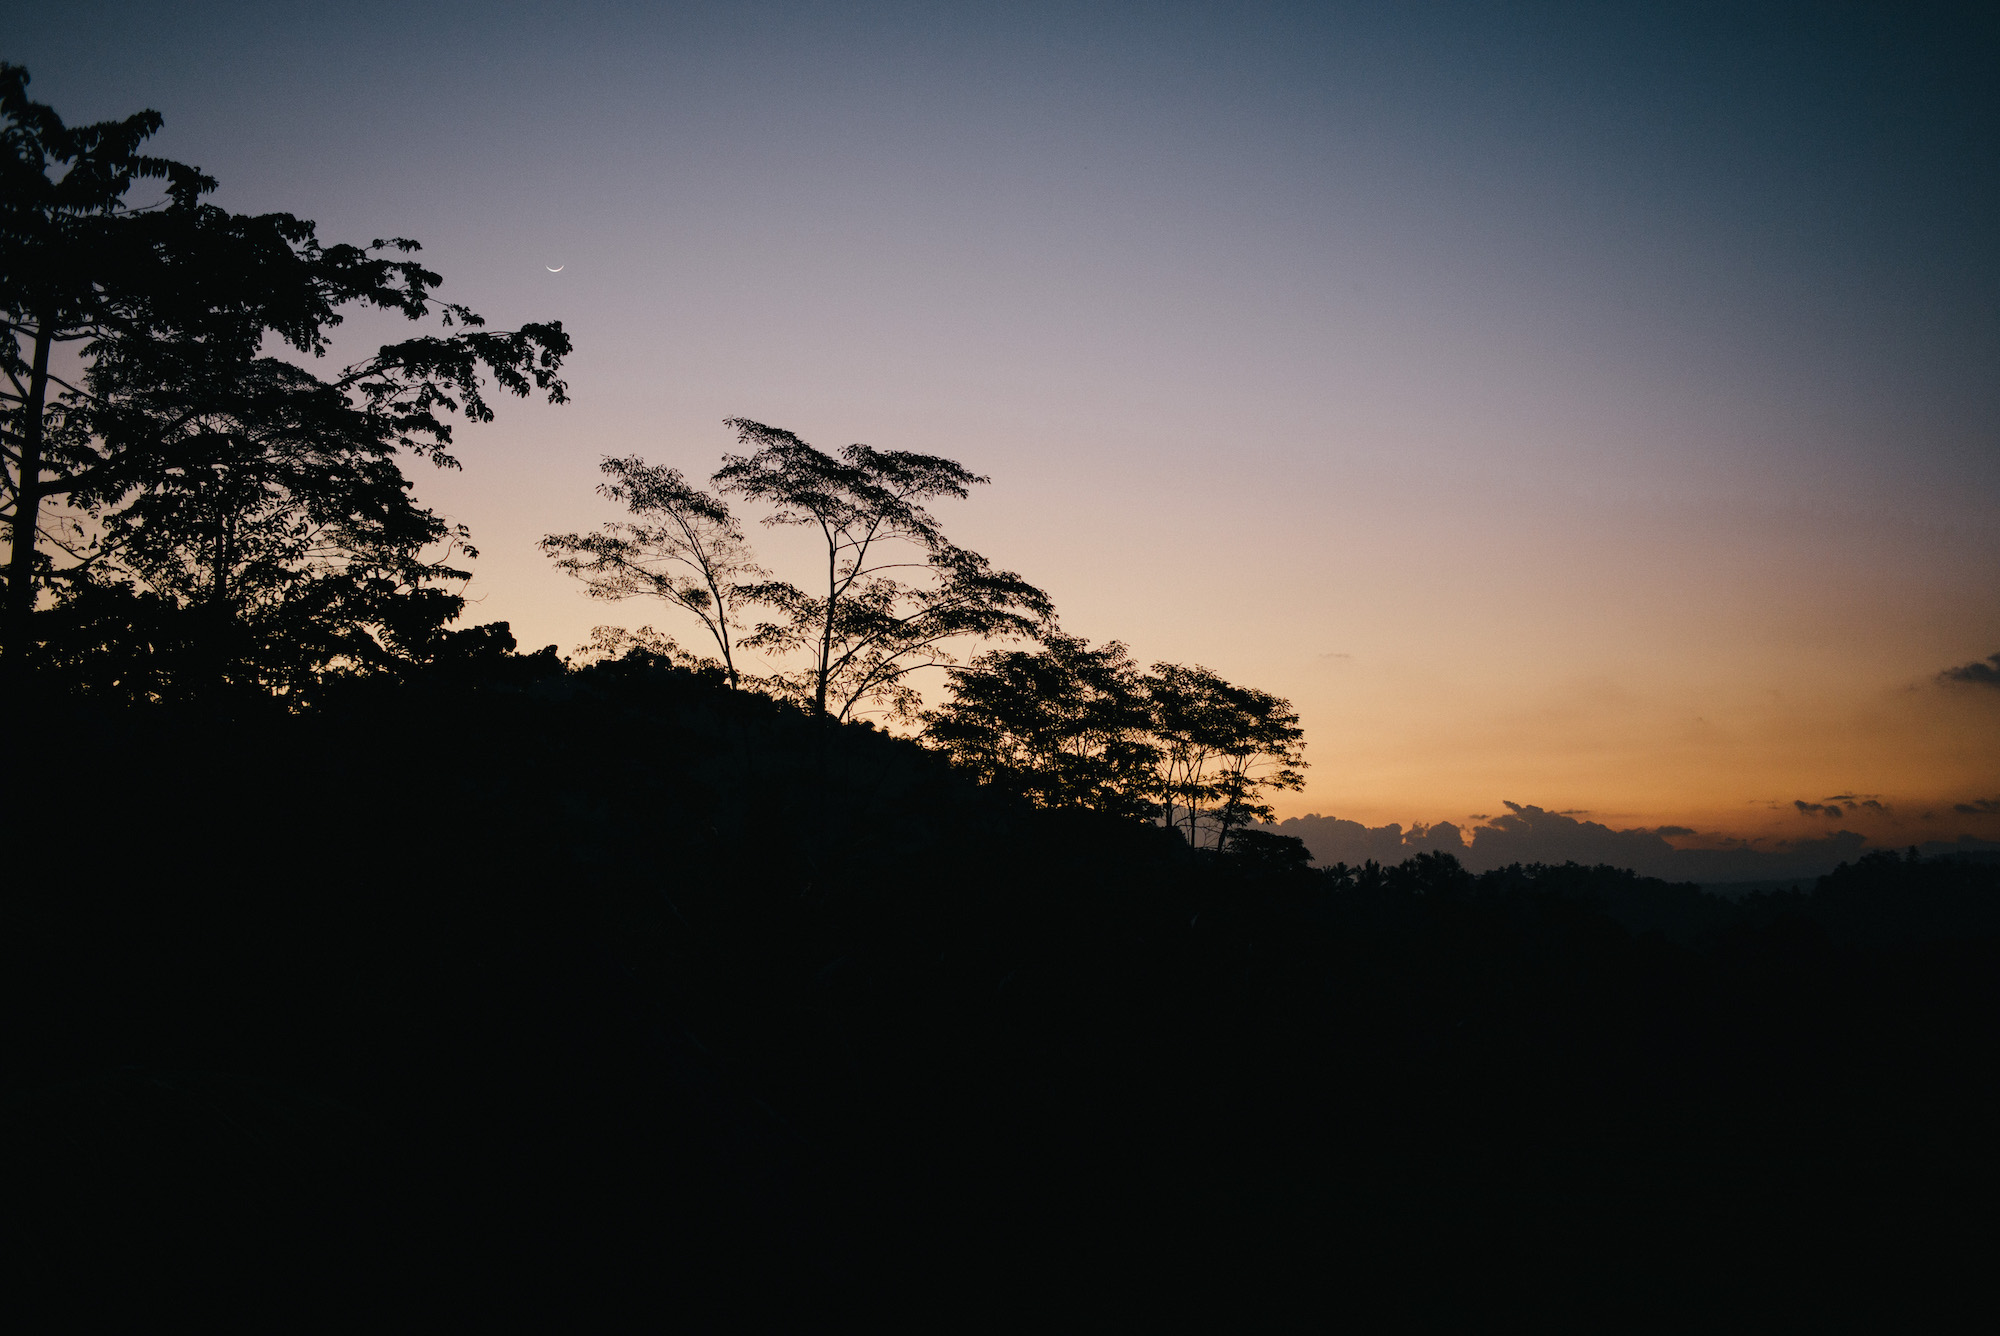  Dusk in Sidemen, Bali near Mount Agung. Shot on Leica M Typ 240 with Summarit 35mm f/2.5 lens. 